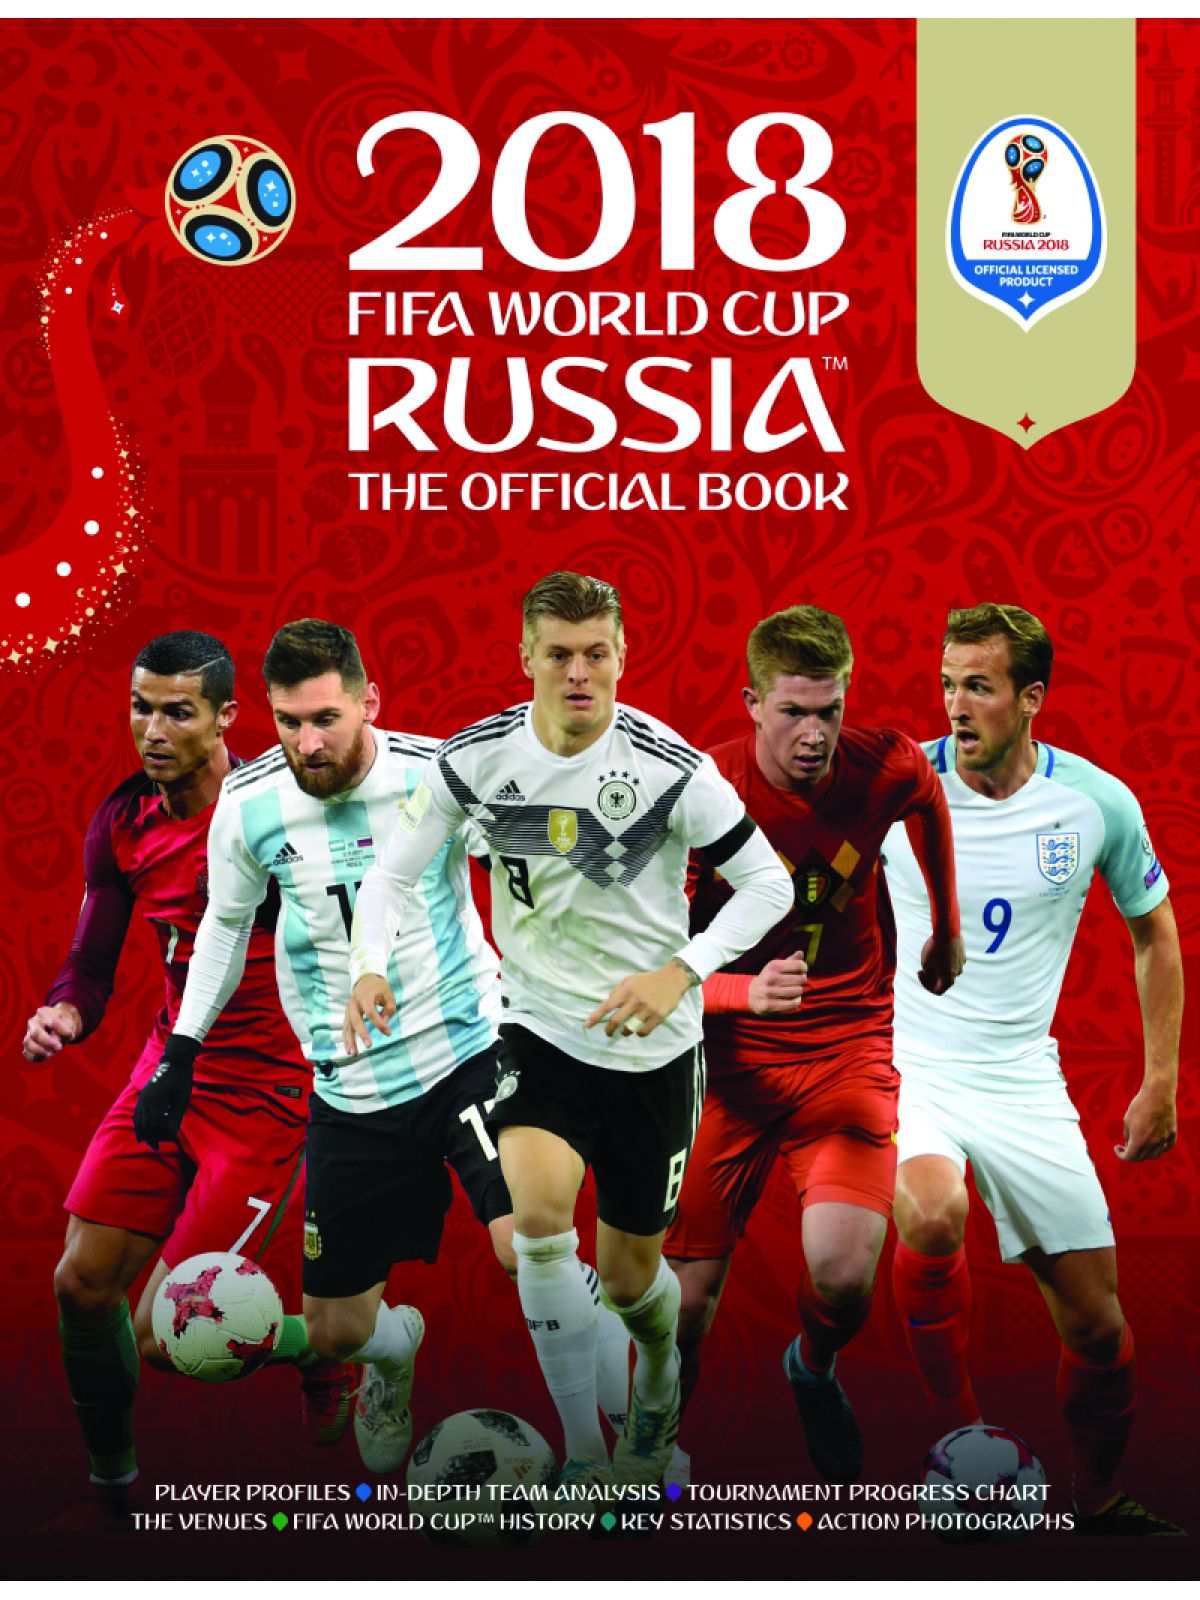 2018 FIFA WORLD CUP RUSSIA THE OFFICIAL BOOK  Купить Книгу на Английском